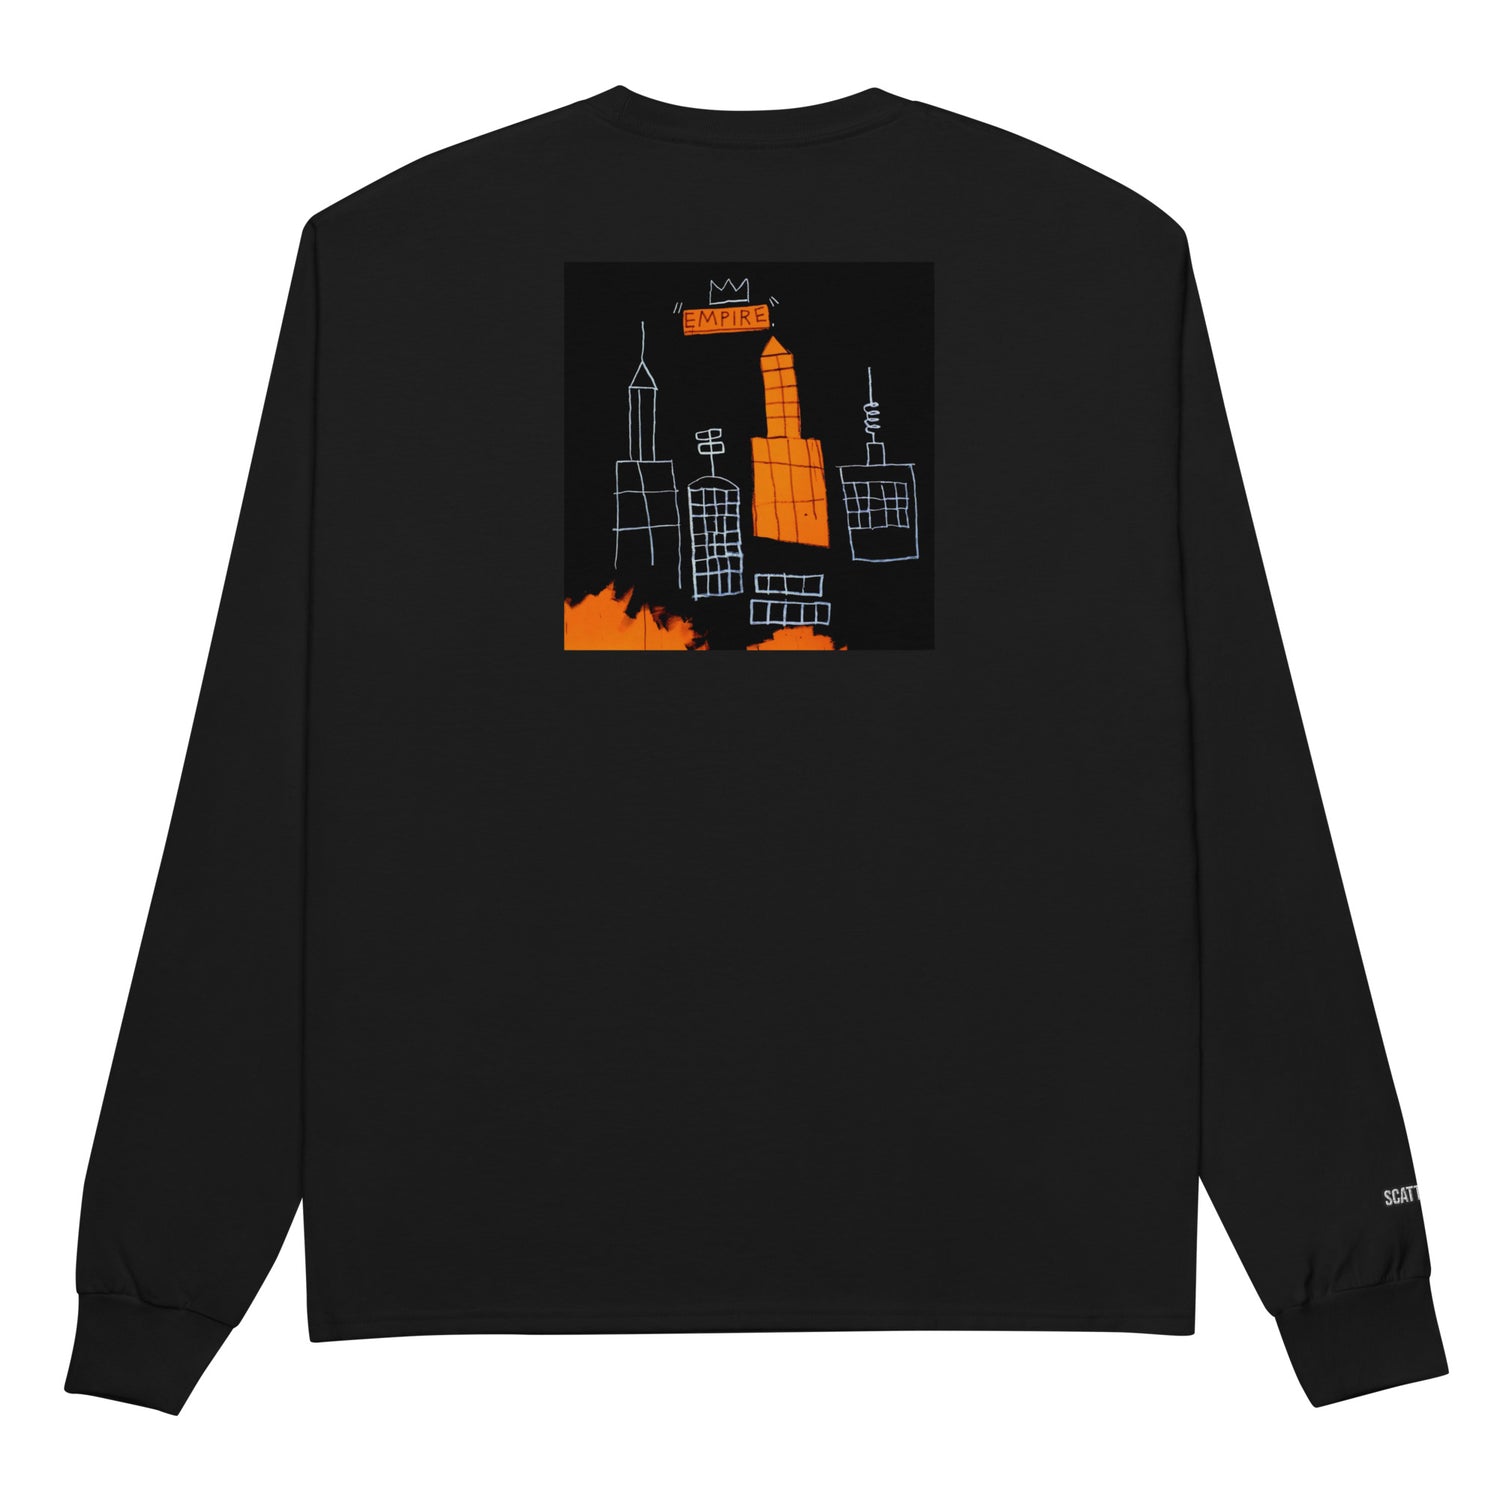 Jean-Michel Basquiat "Mecca" Artwork Printed Premium Black Champion Crewneck Long Sleeve Shirt Scattered Streetwear